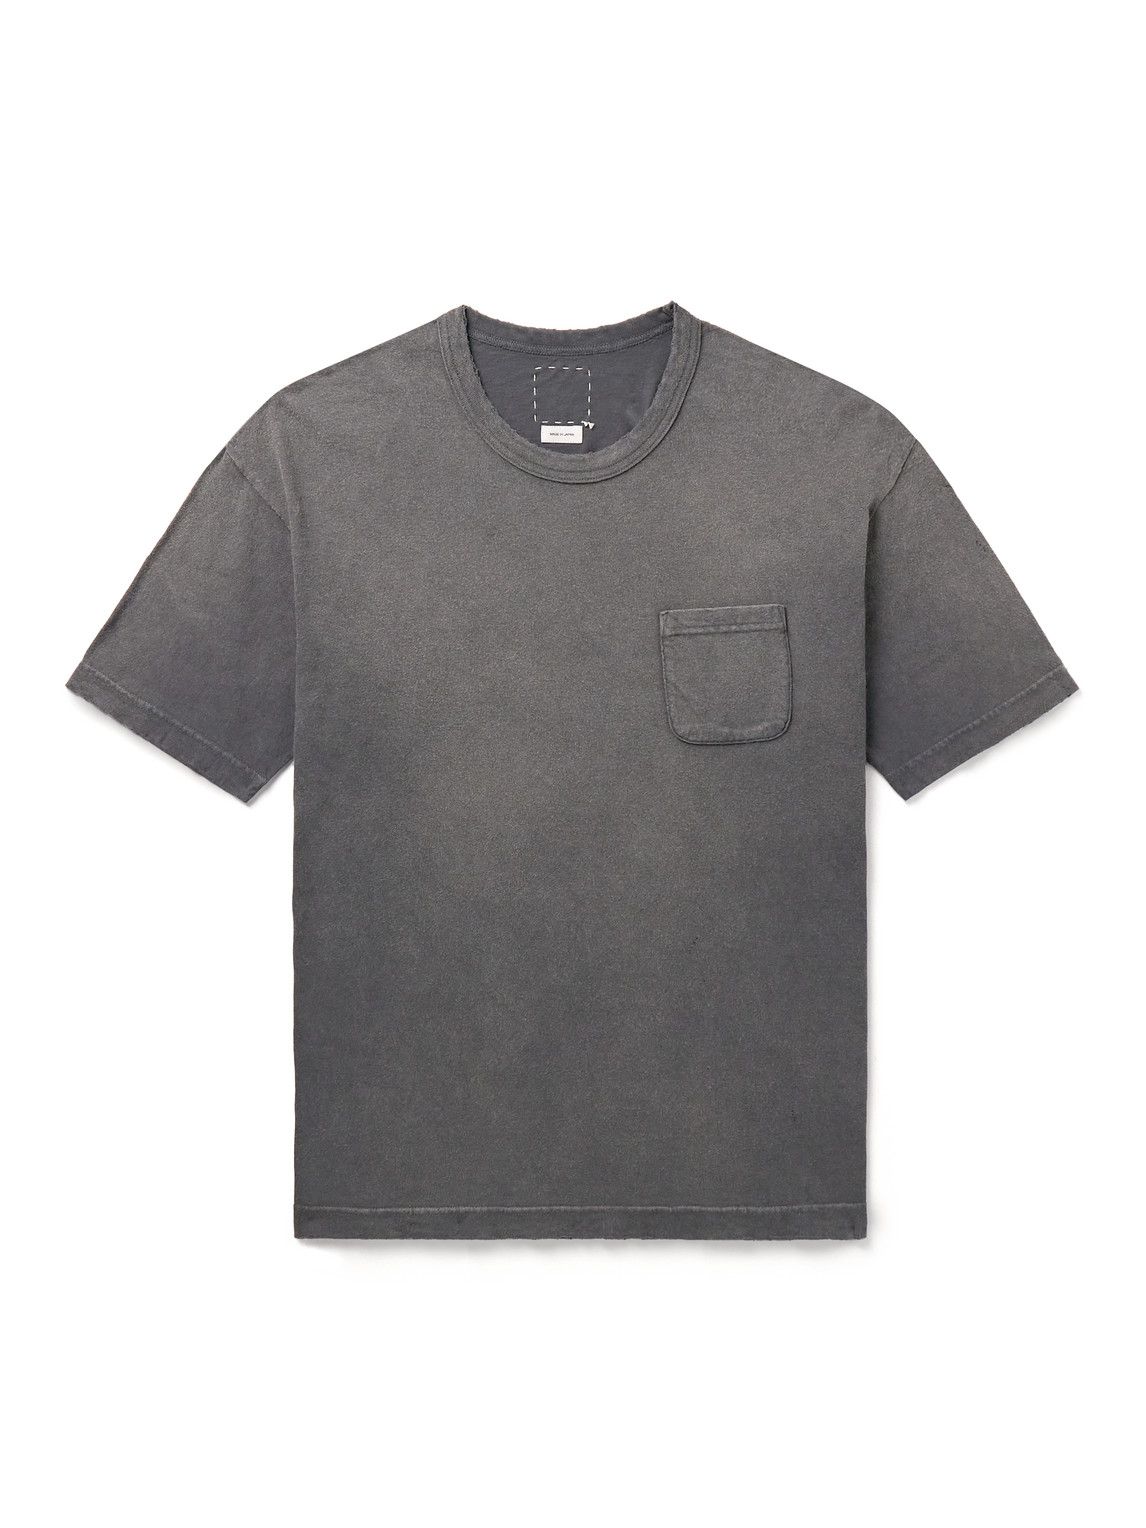 Jumbo Distressed Garment-Dyed Cotton-Jersey T-Shirt